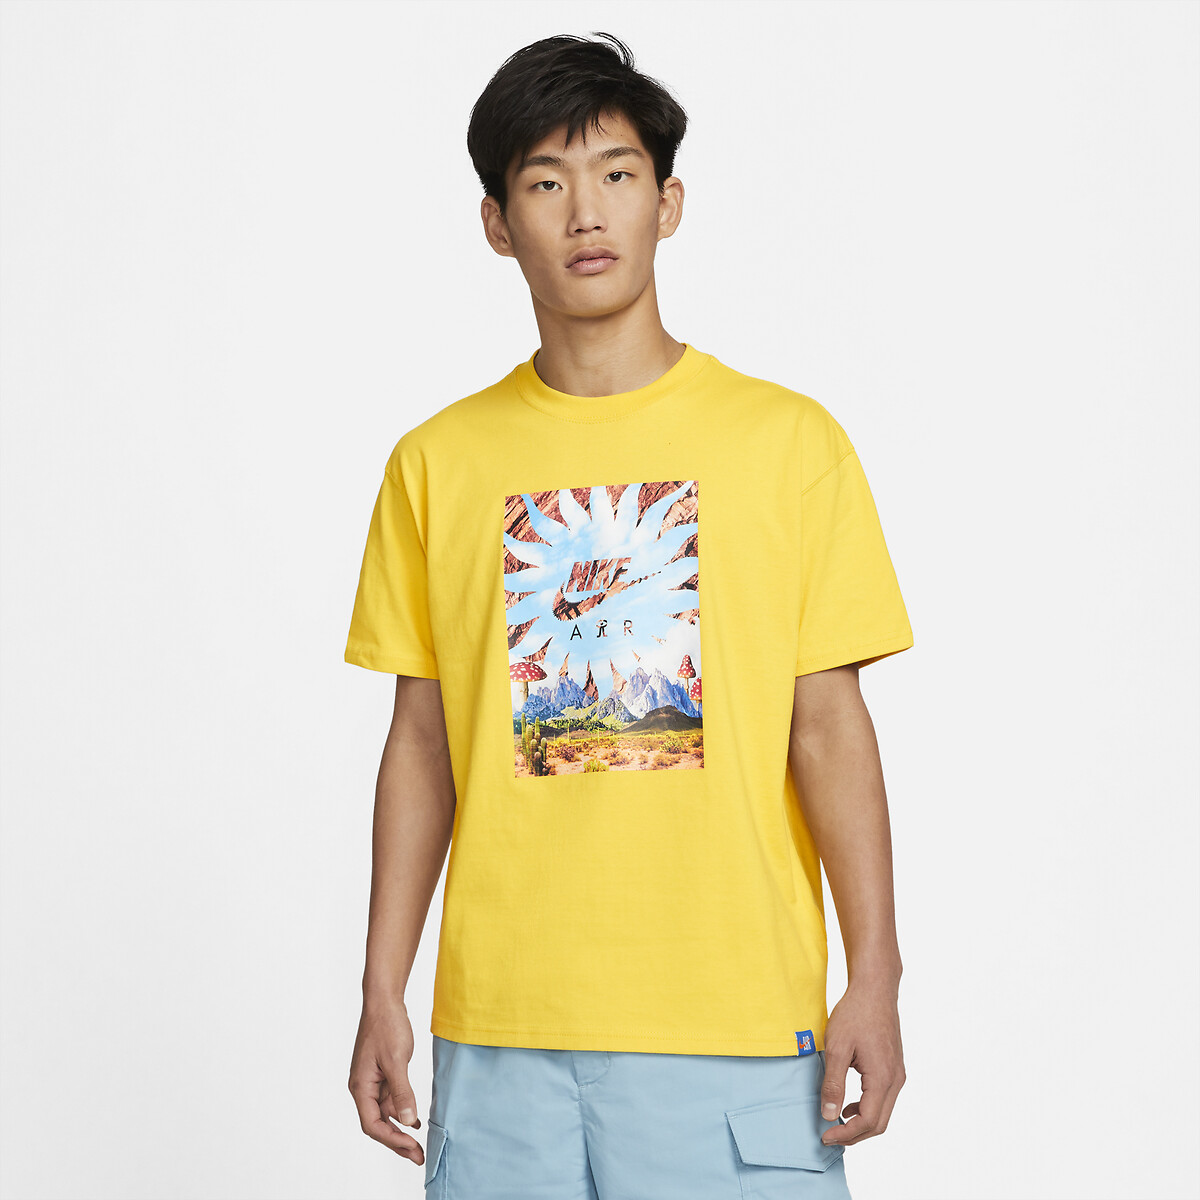 Reflectie Bloody tetraëder T-shirt voor trail geel Nike | La Redoute